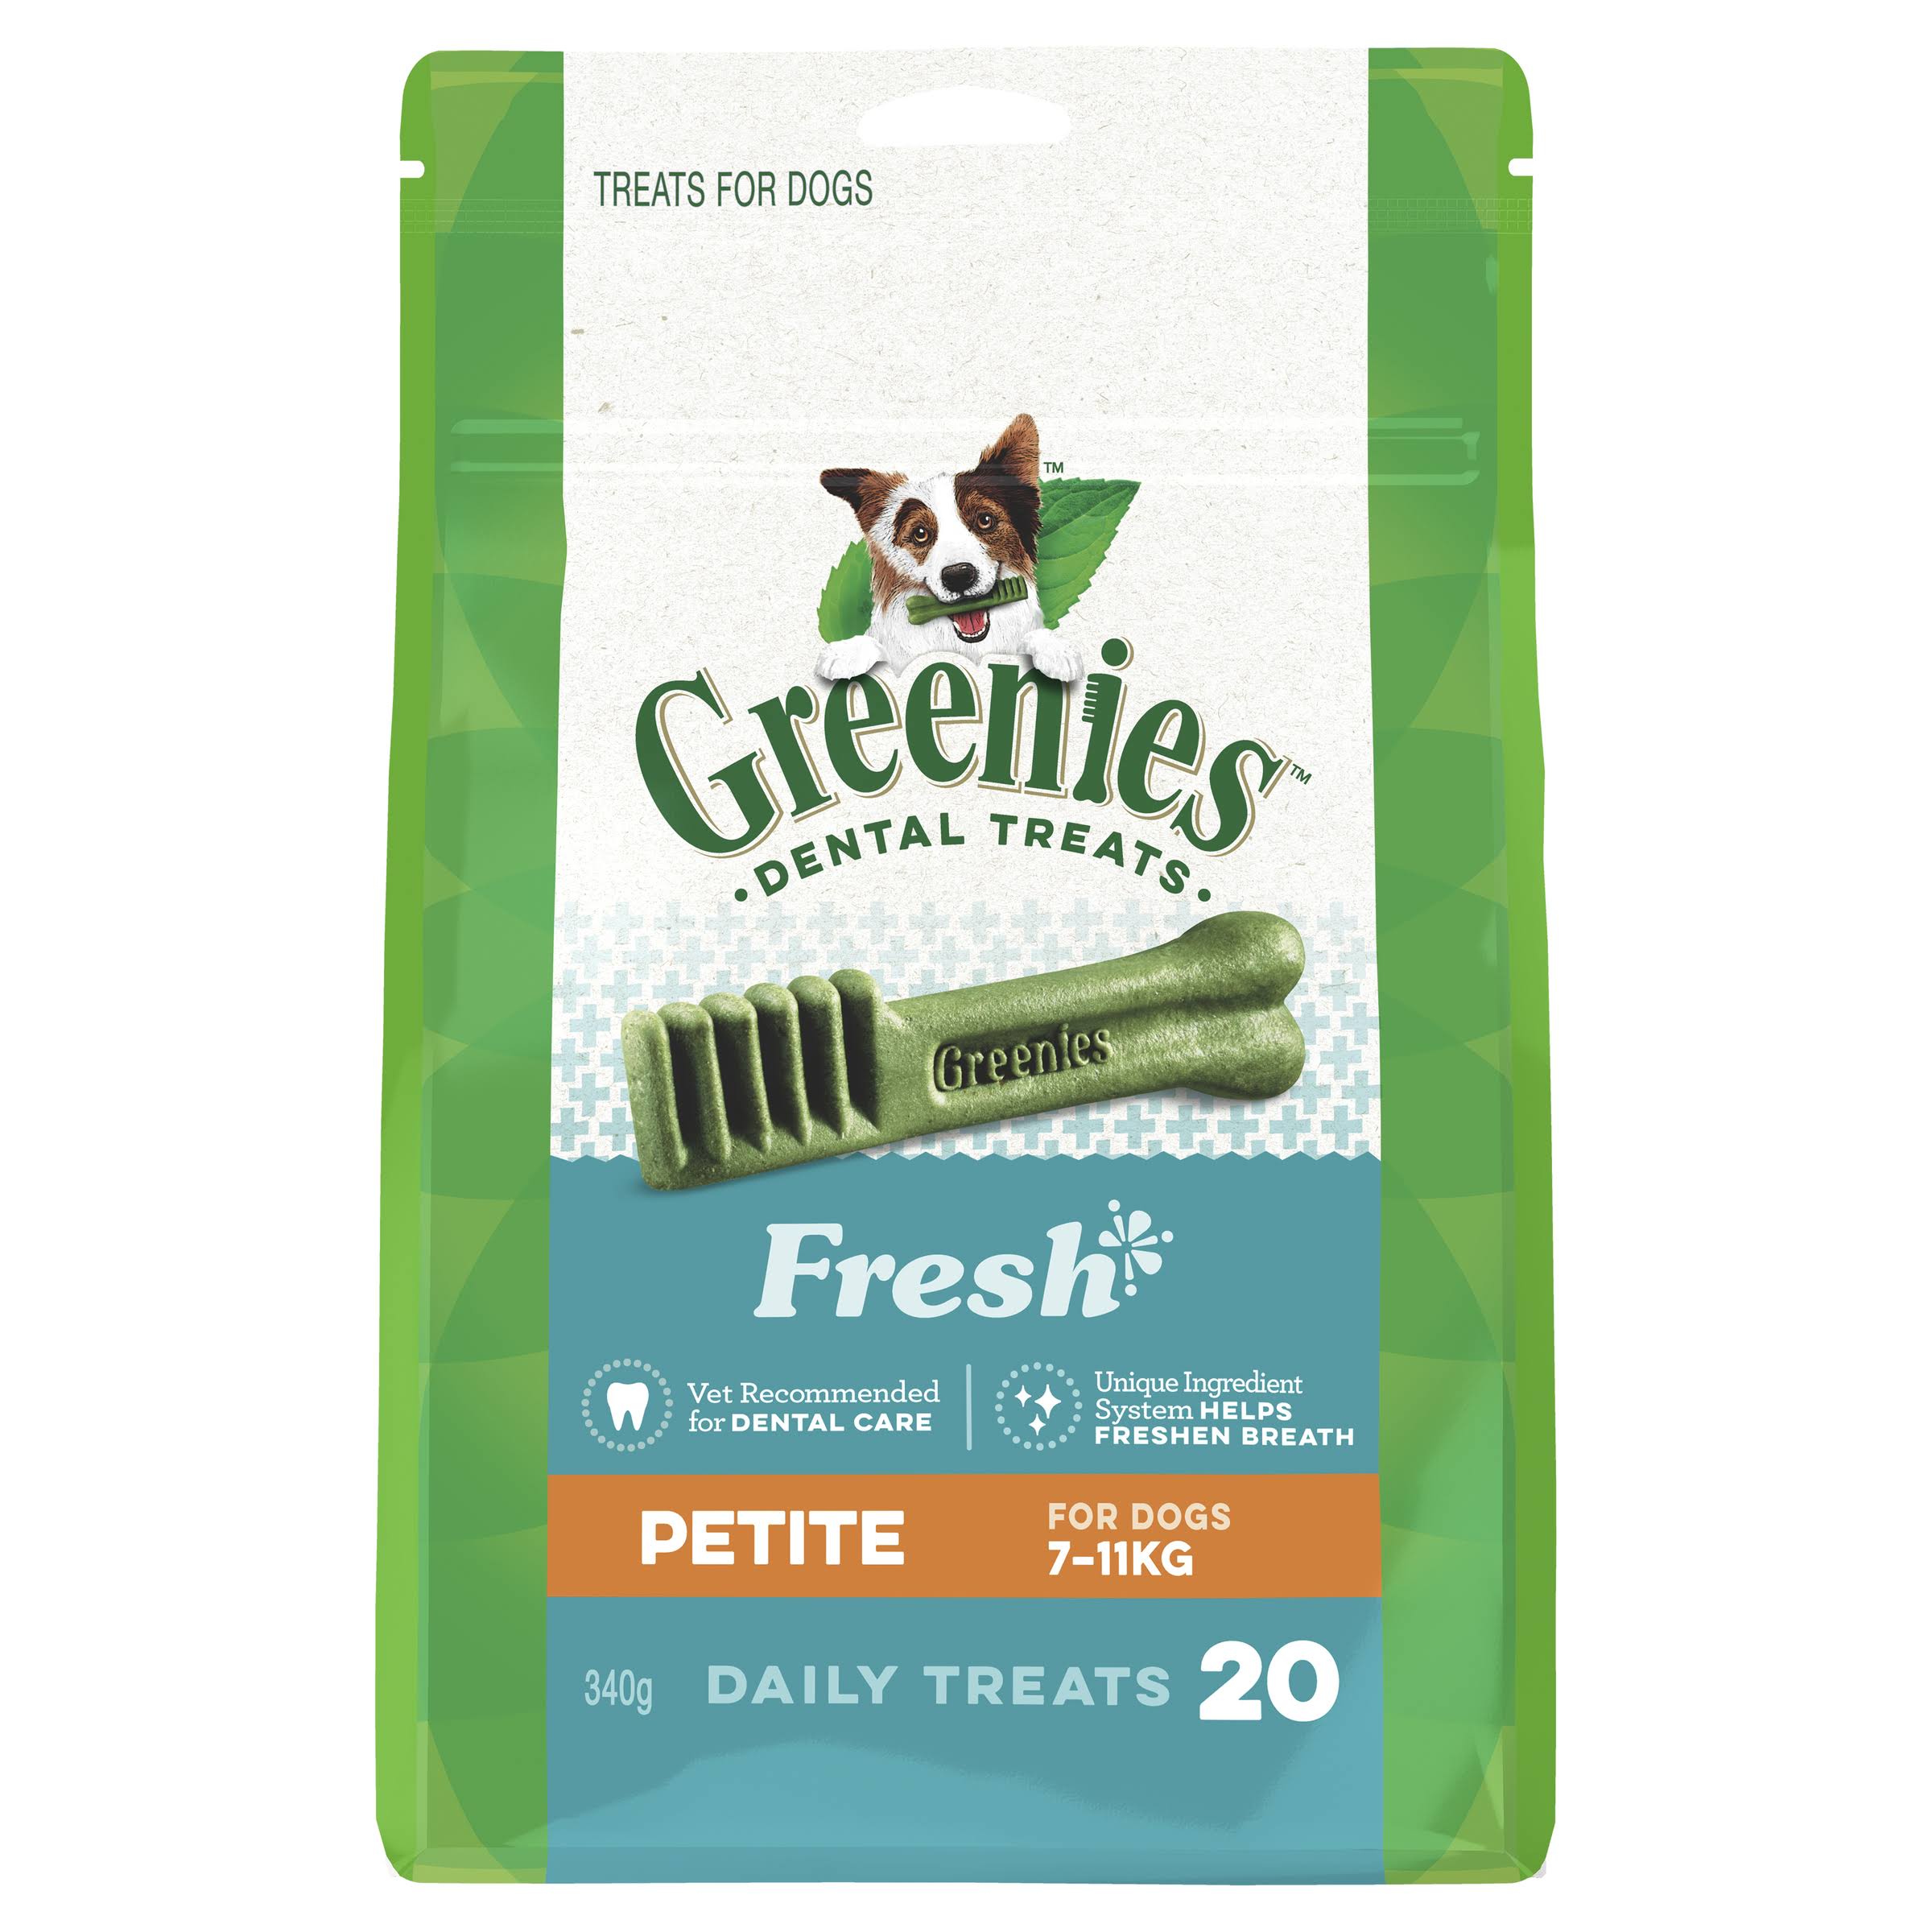 Greenies Freshmint Dental Chews Treats for Dogs - 12oz, Petite